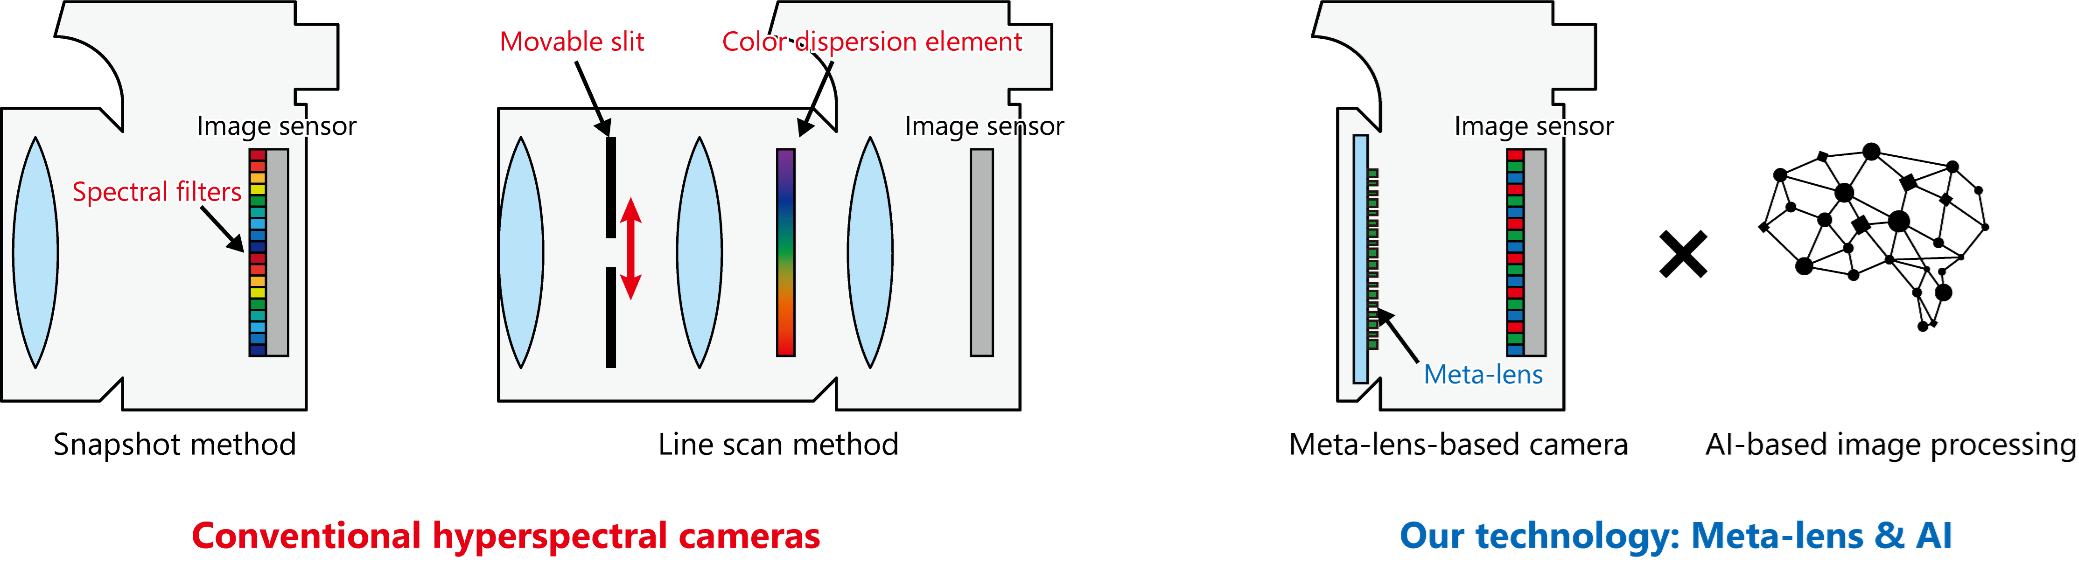 Figure 1 Comparison of Hyperspectral Camera Configuration